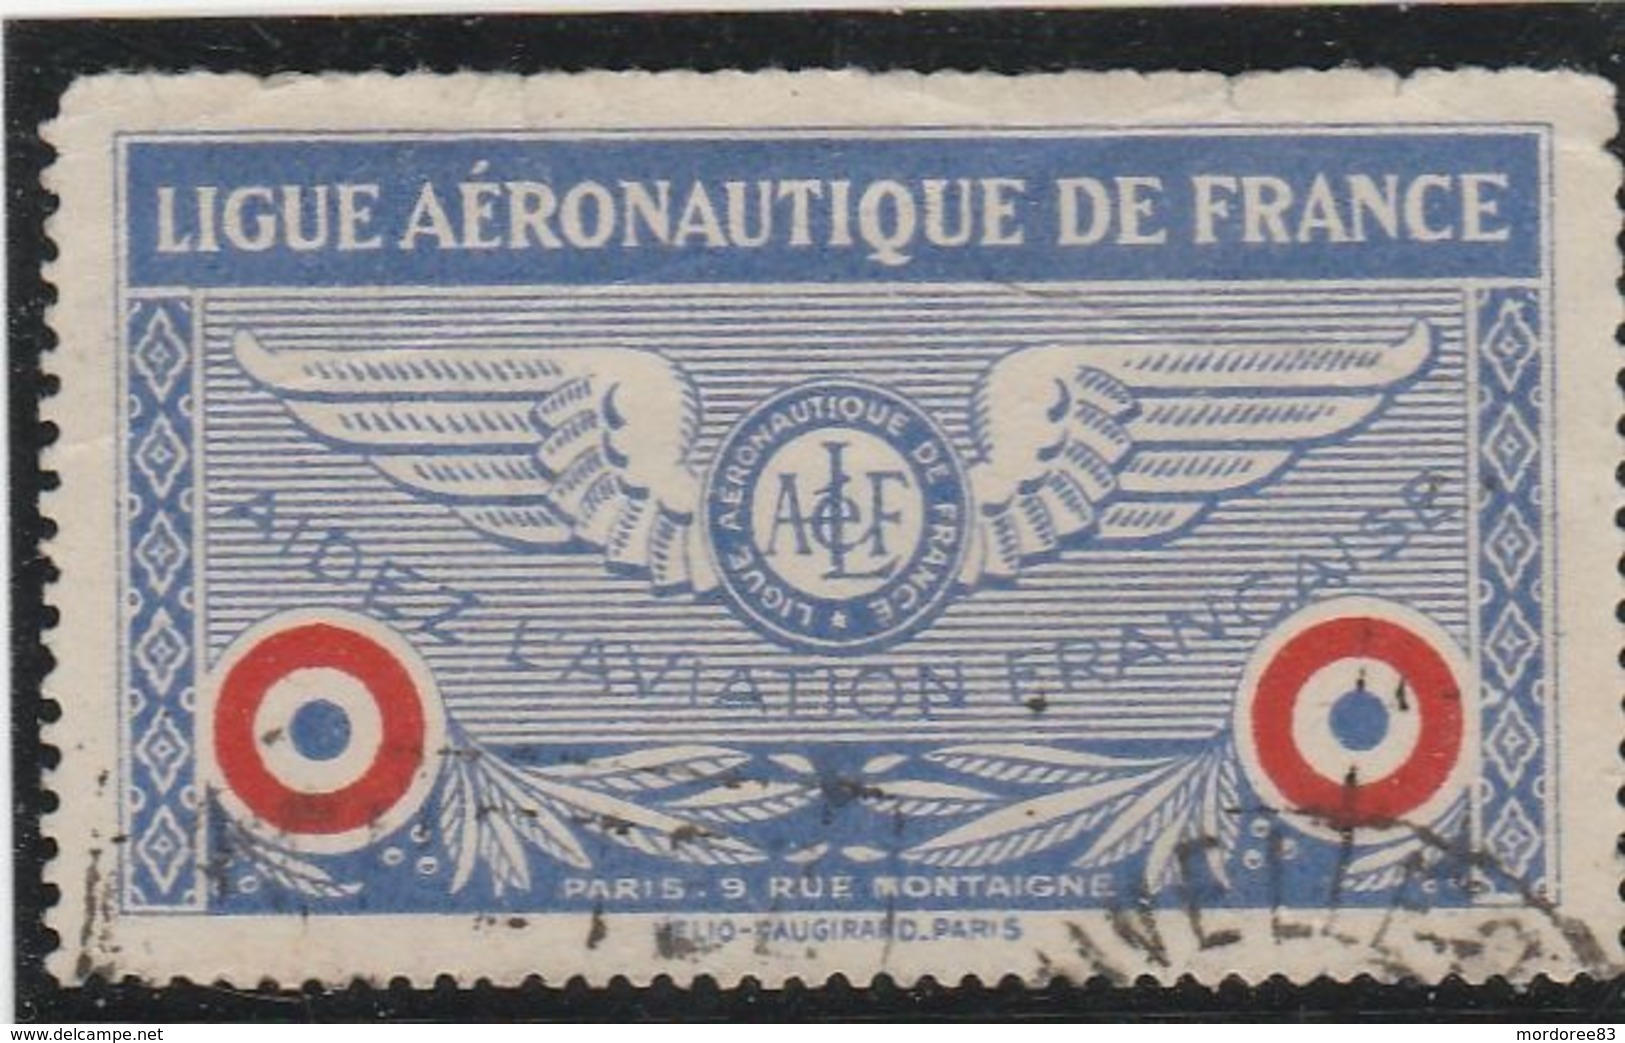 VIGNETTE OBLITERE LIGUE AERONAUTIQUE DE FRANCE (note) - Aviación